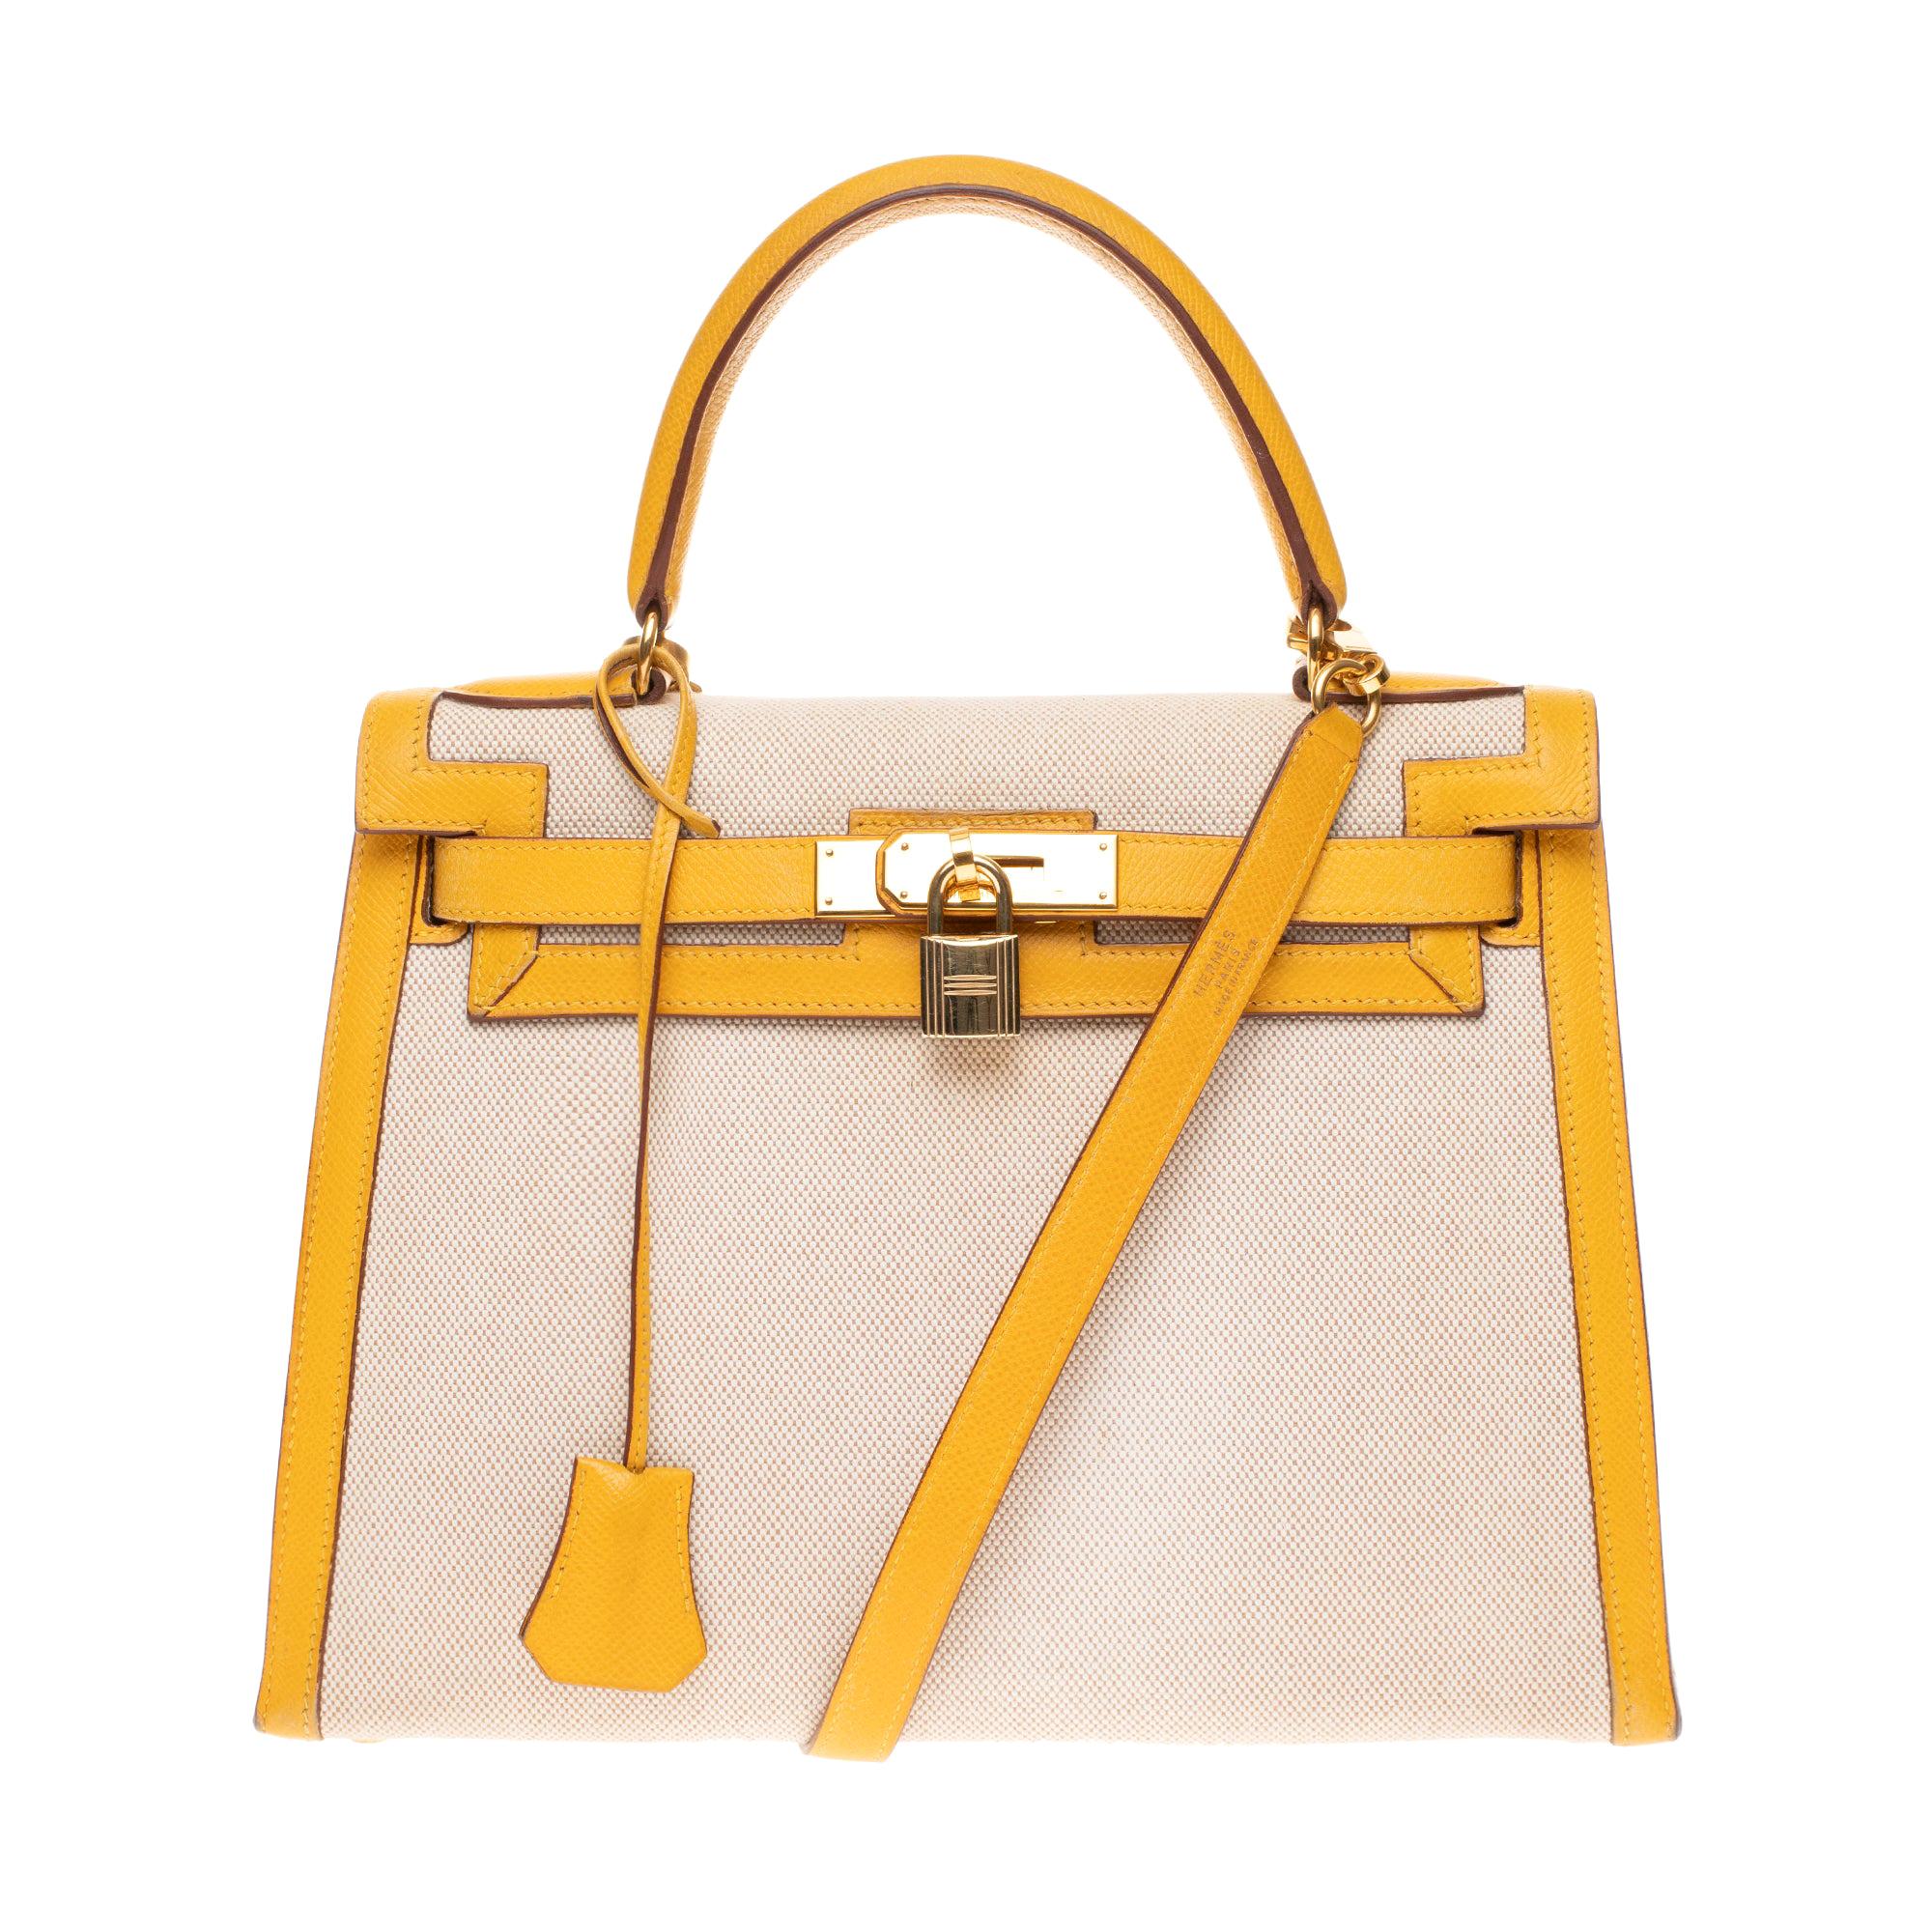 HERMES KELLY LİGHT YELLOW - Luxury Bags